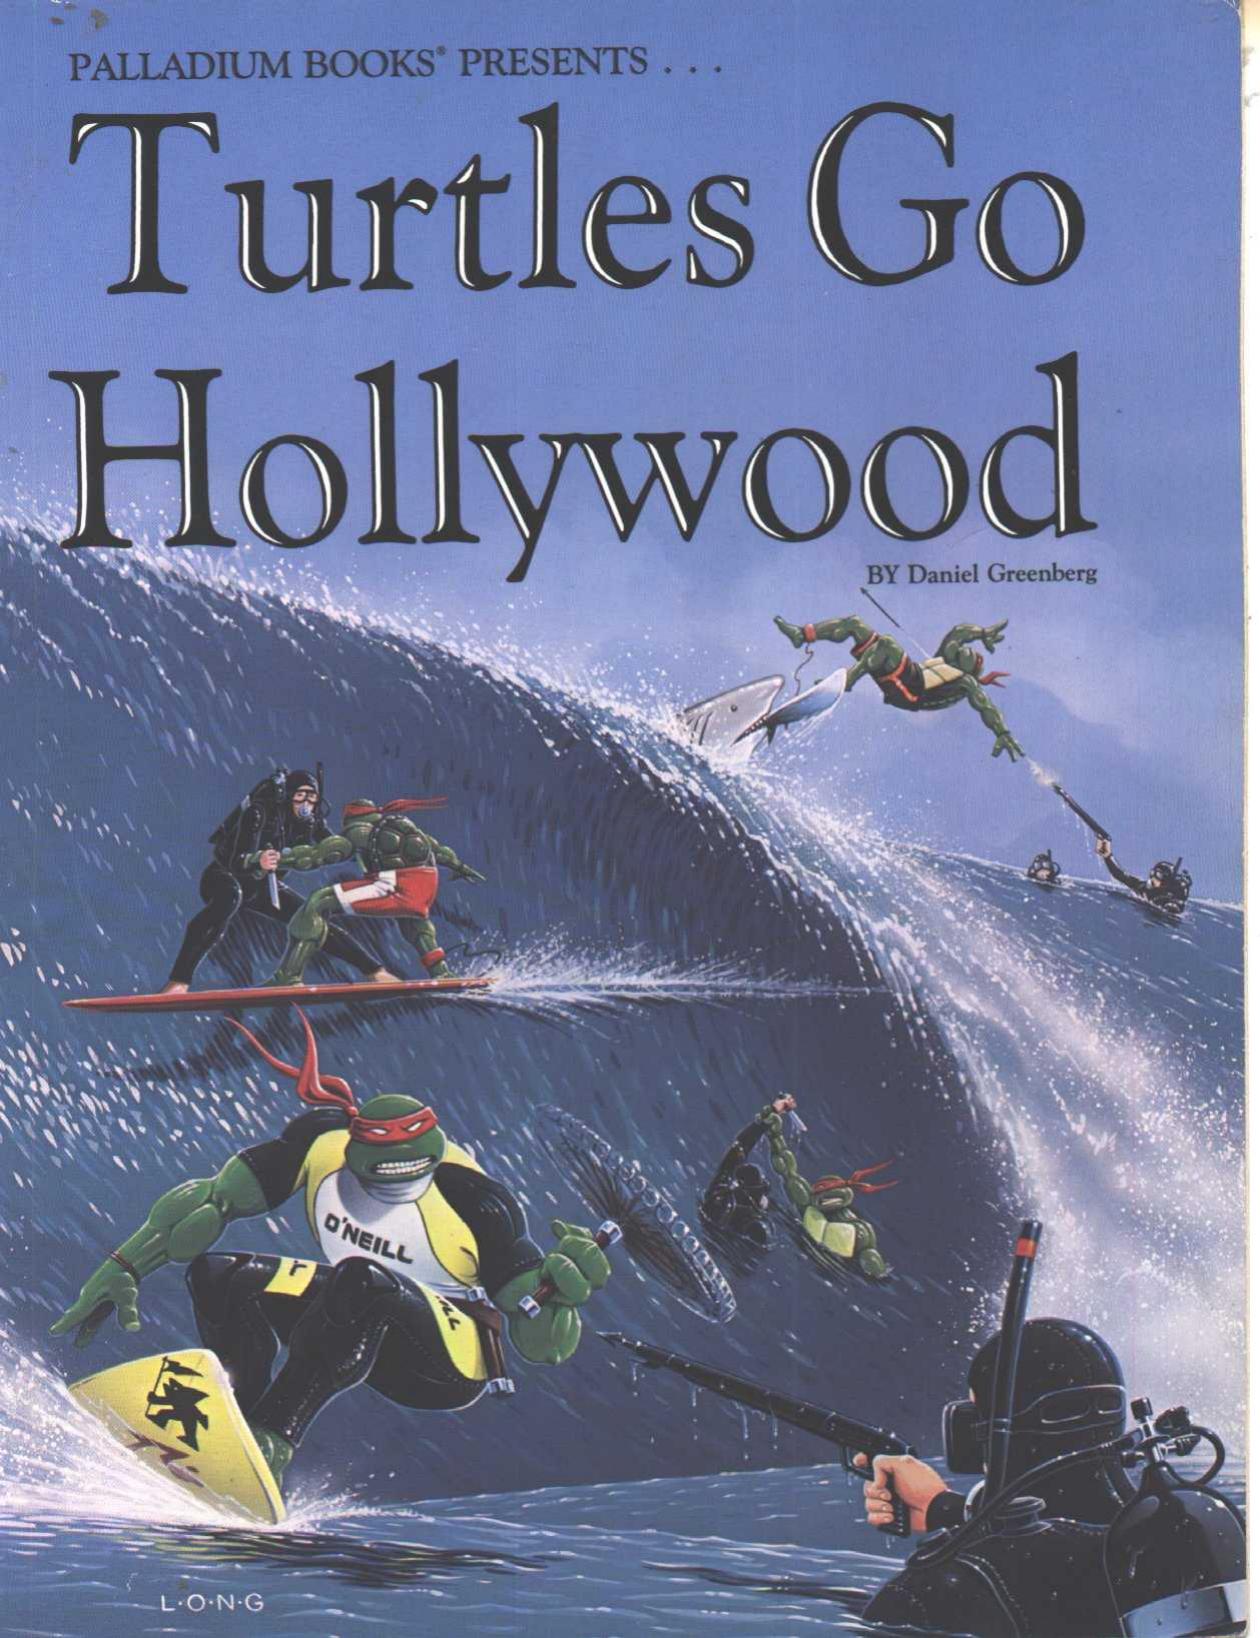 Turtles Go Hollywood